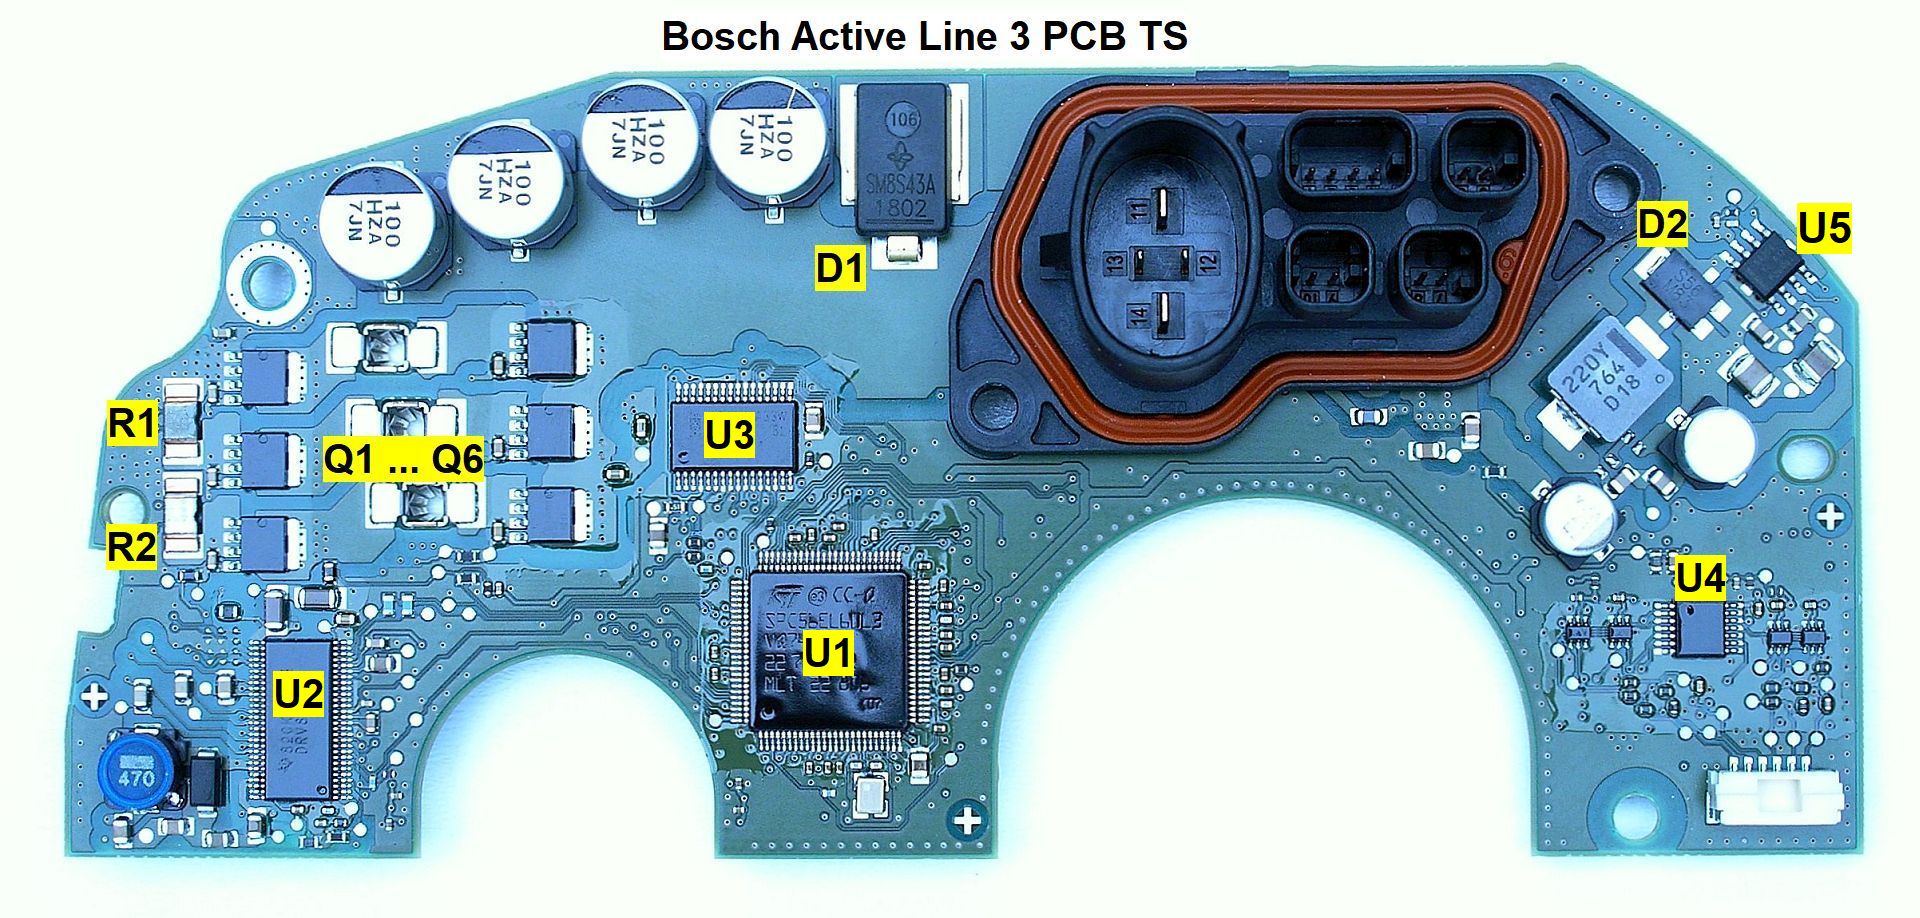 Bosch active line 3 PCB TS dismantled